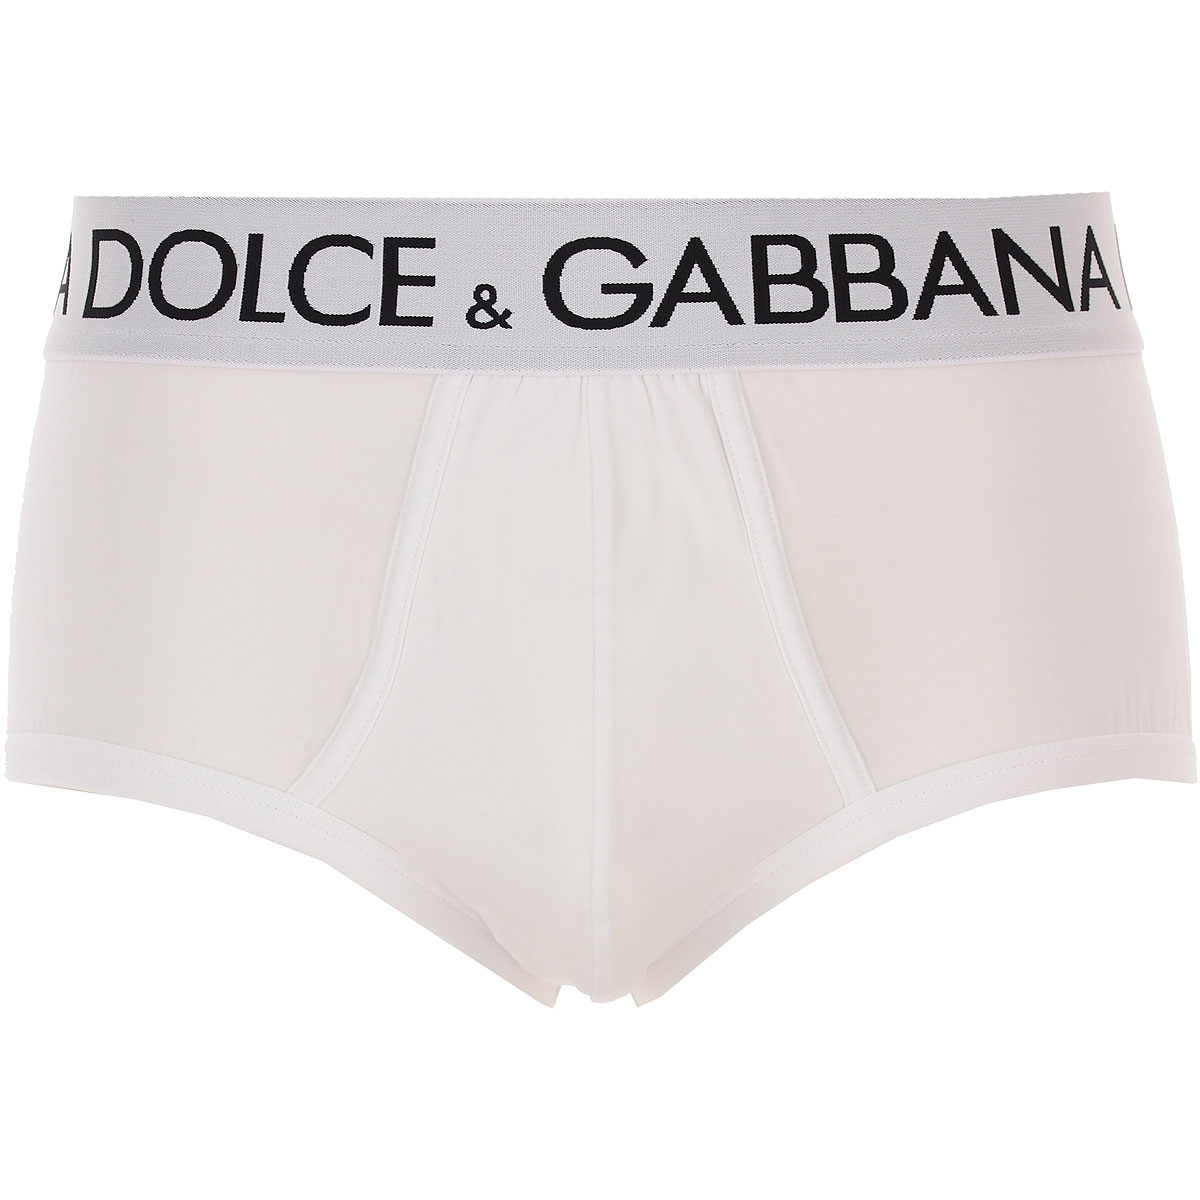 Mens Underwear Dolce & Gabbana, Style code: m3d53j-fughh-zm023